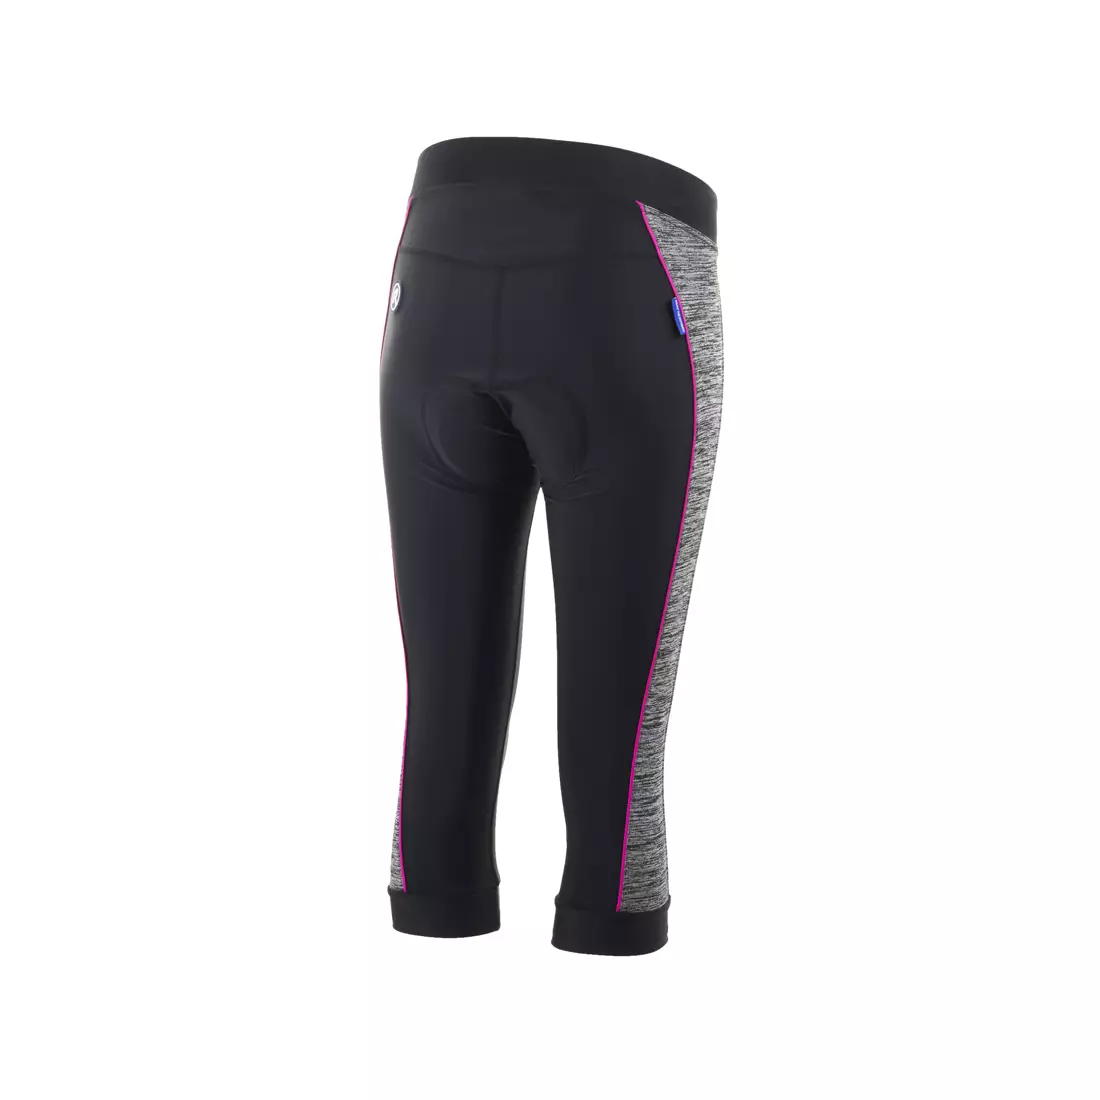 ROGELLI CAROU 3.0 women's 3/4 cycling shorts black-gray-pink 010.259